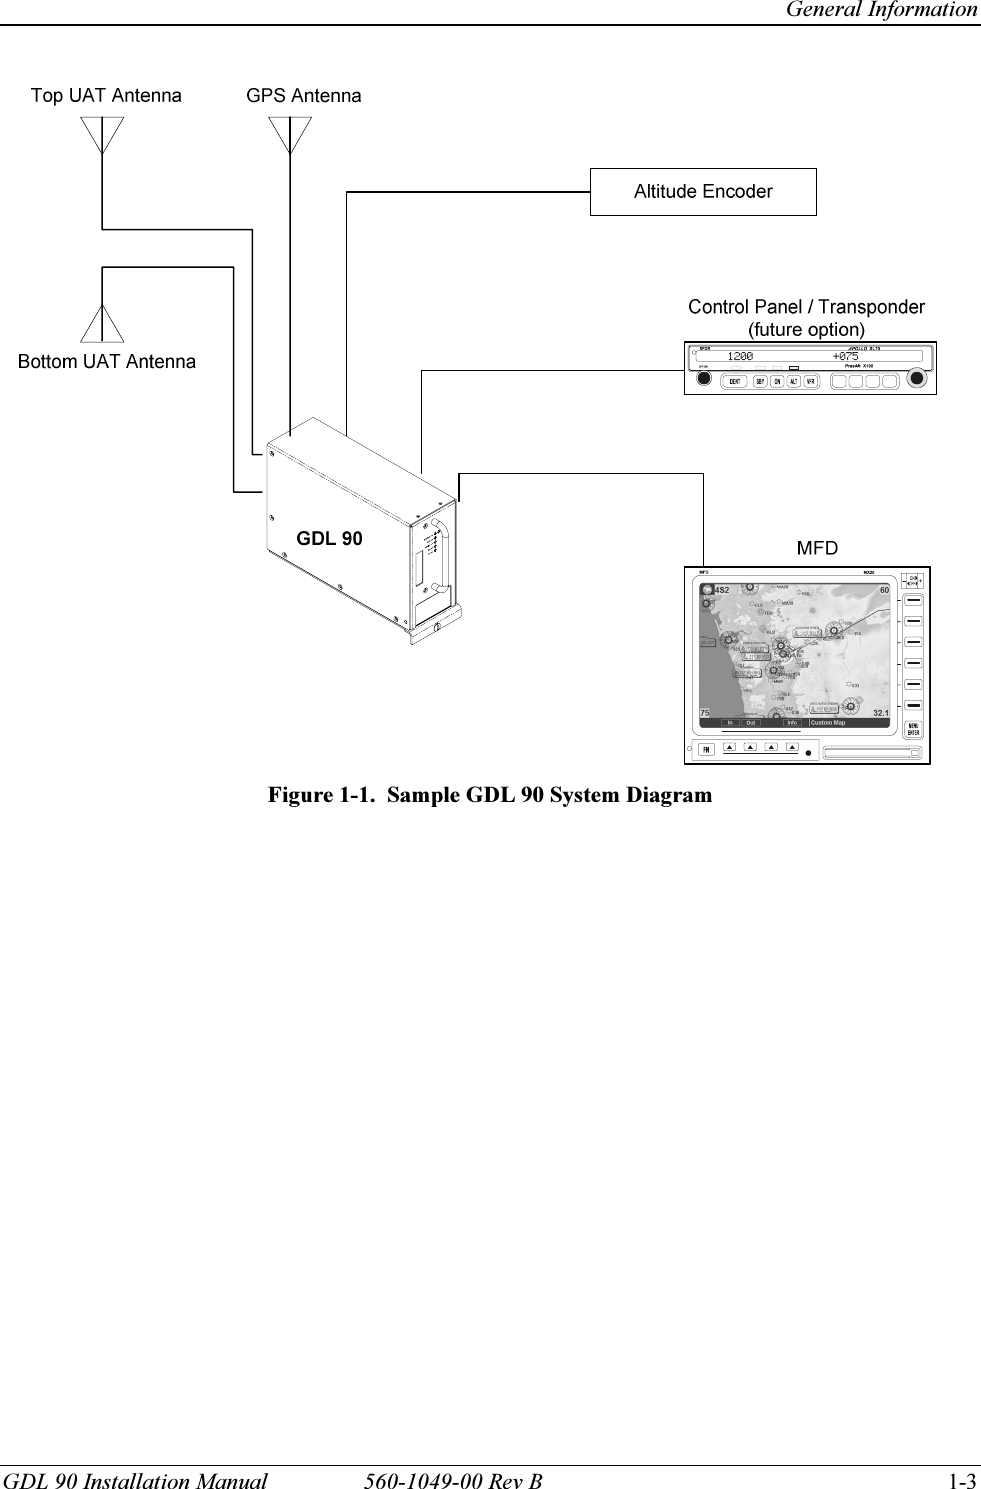   General Information GDL 90 Installation Manual  560-1049-00 Rev B    1-3  Figure 1-1.  Sample GDL 90 System Diagram  